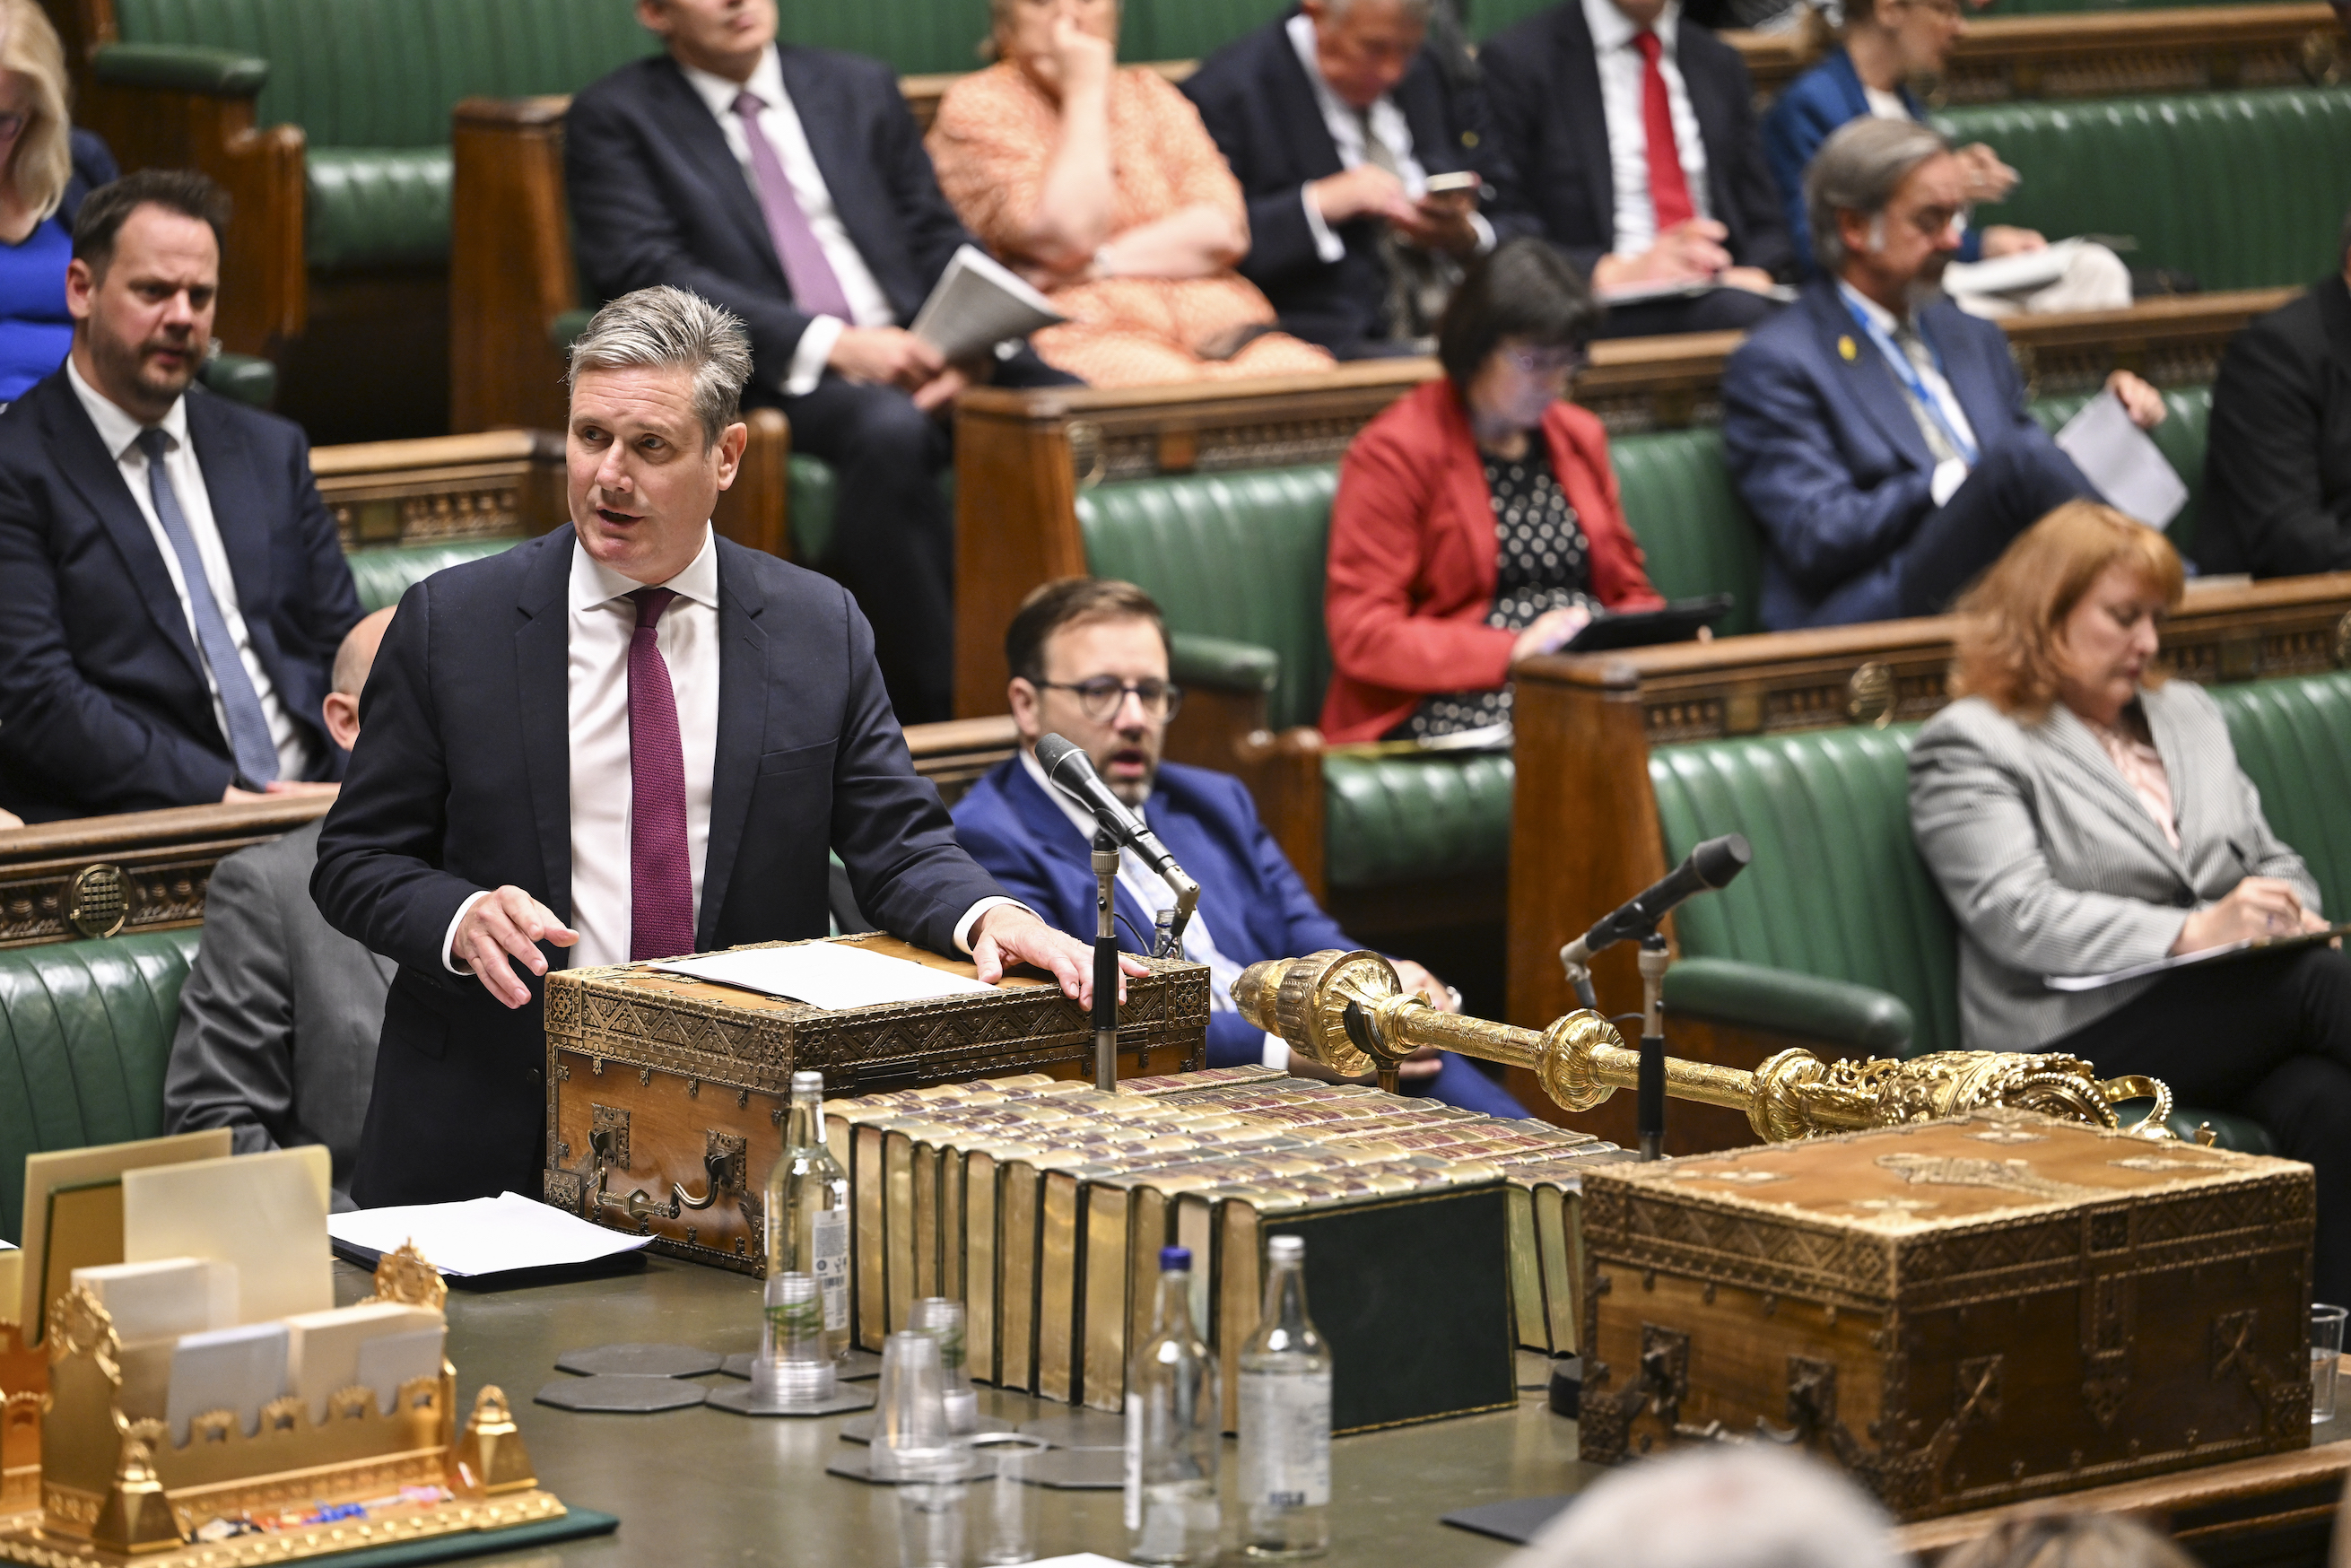 Keir Starmer addresses the House of Commons.